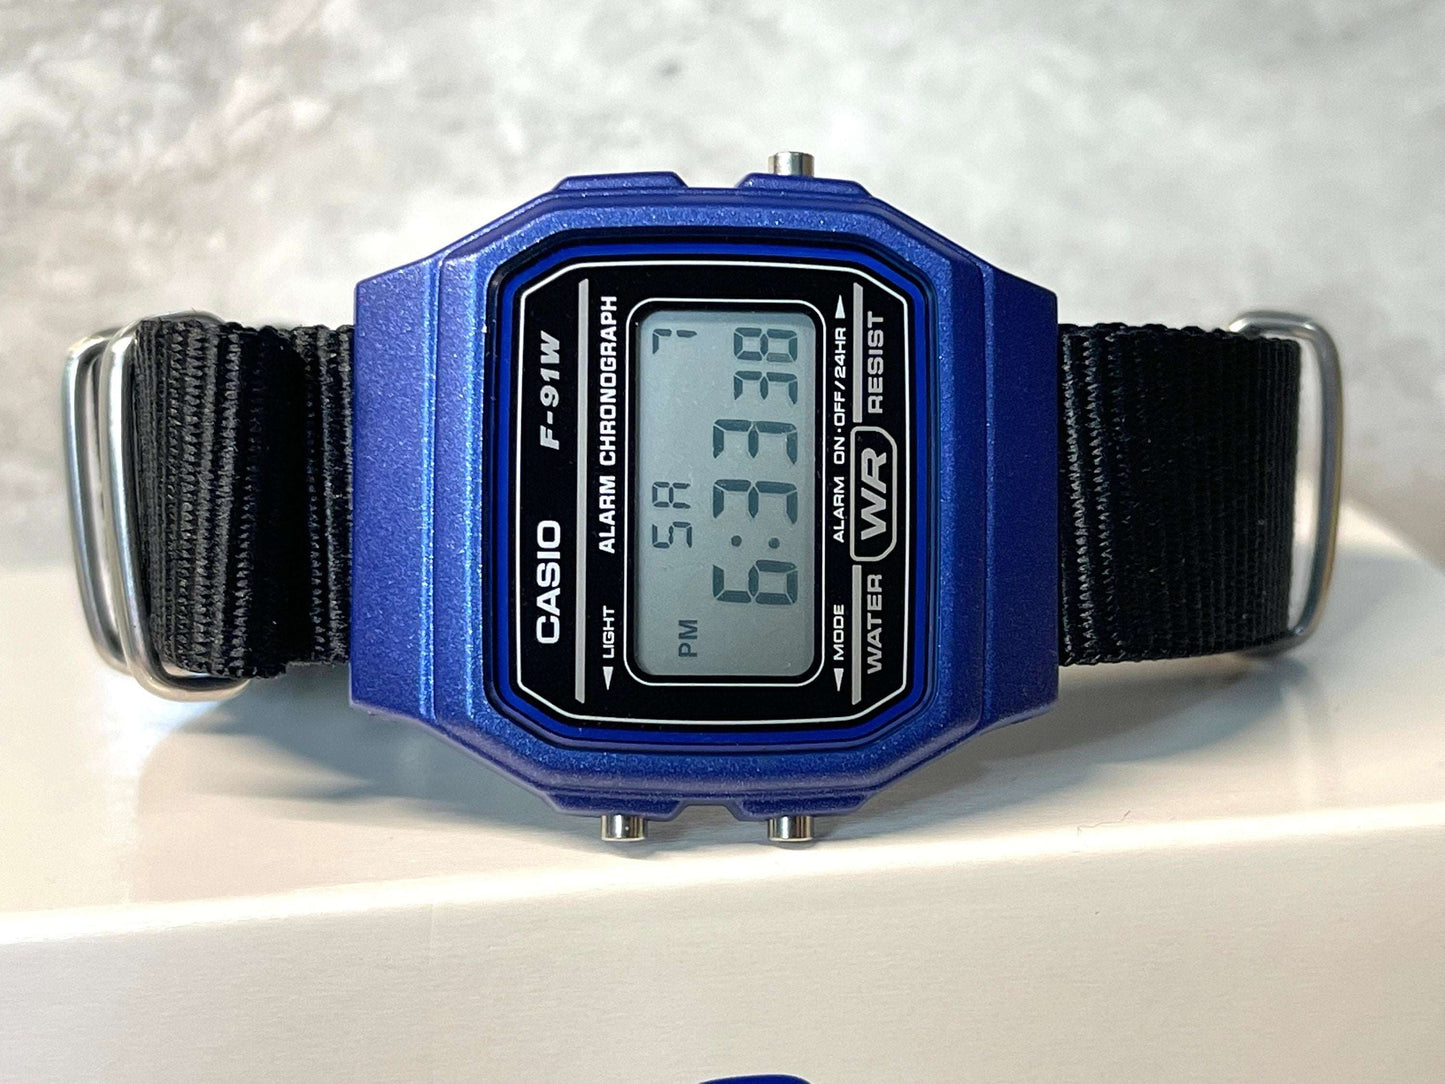 Custom Blue Casio Watch on Black Strap w/ silver hardware